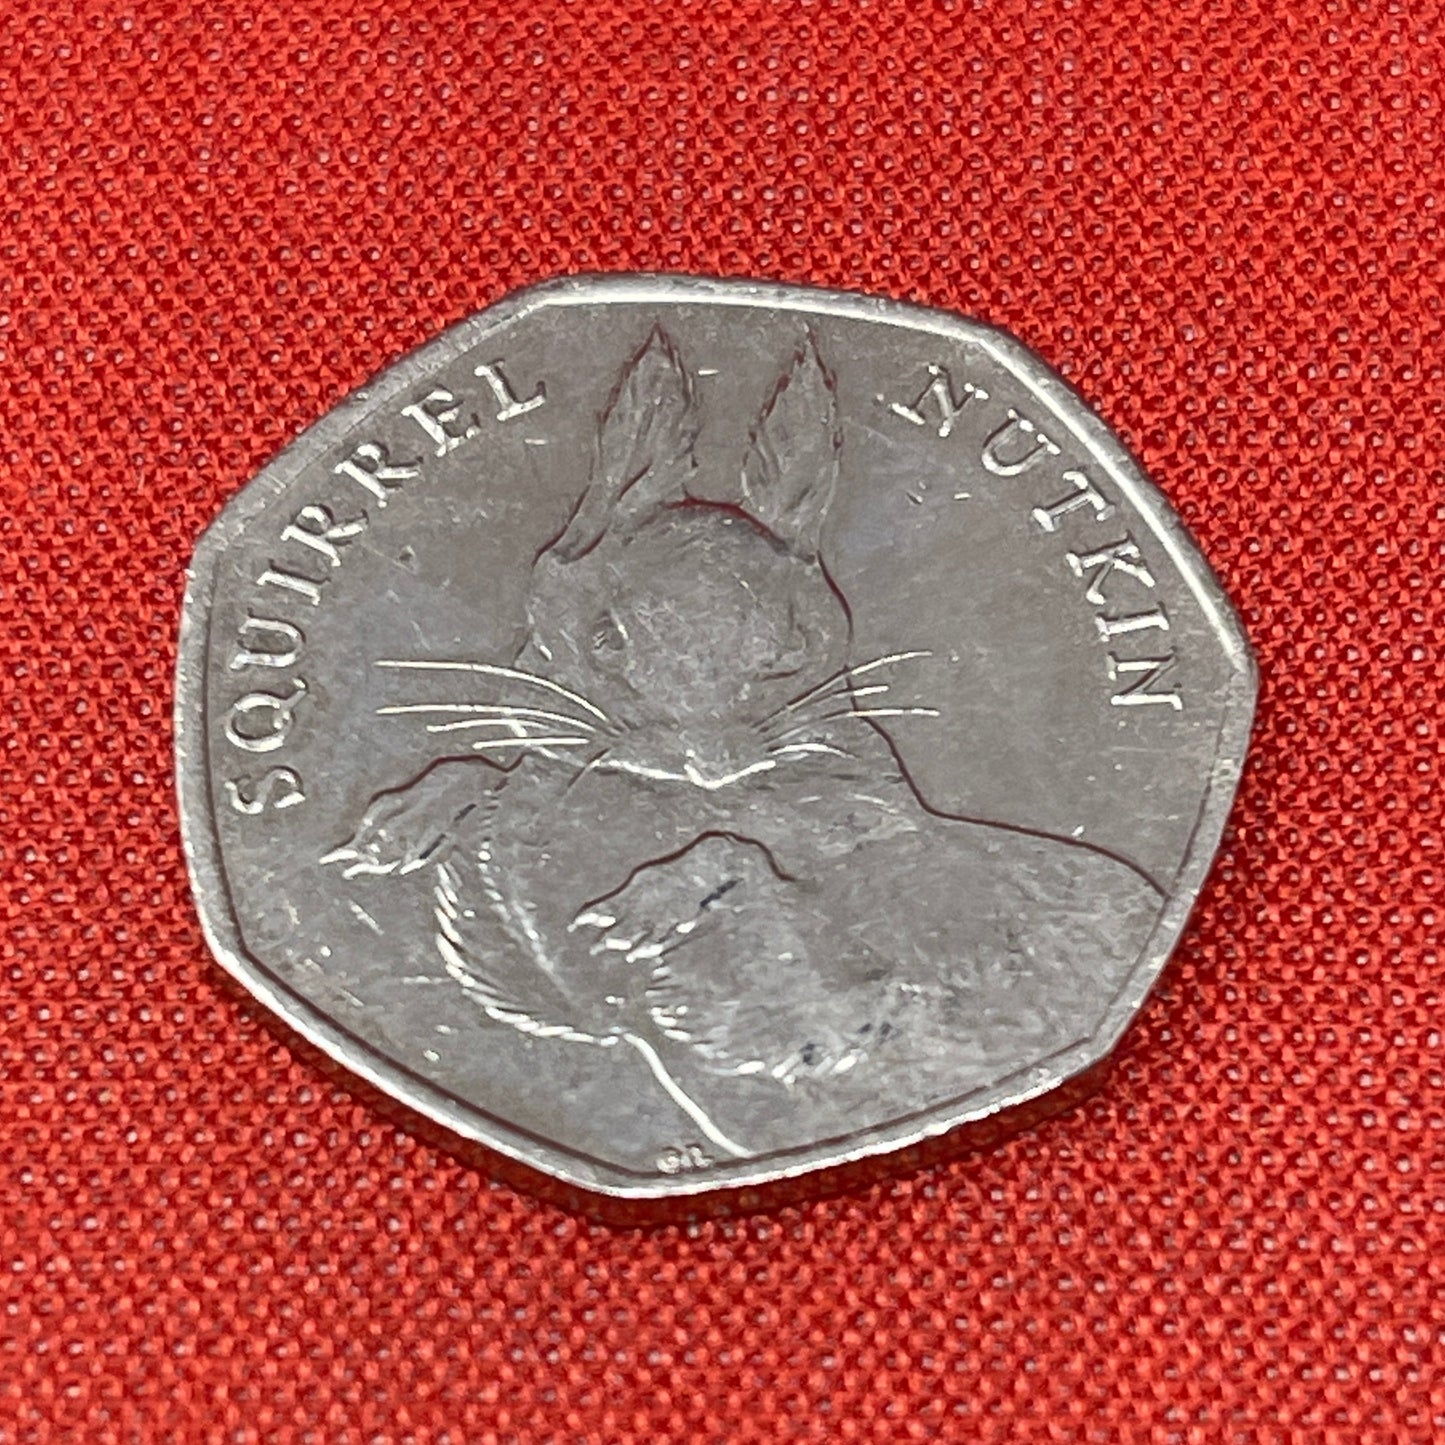 Beatrix Potter Squirrel Nutkin 50p Coin 2016